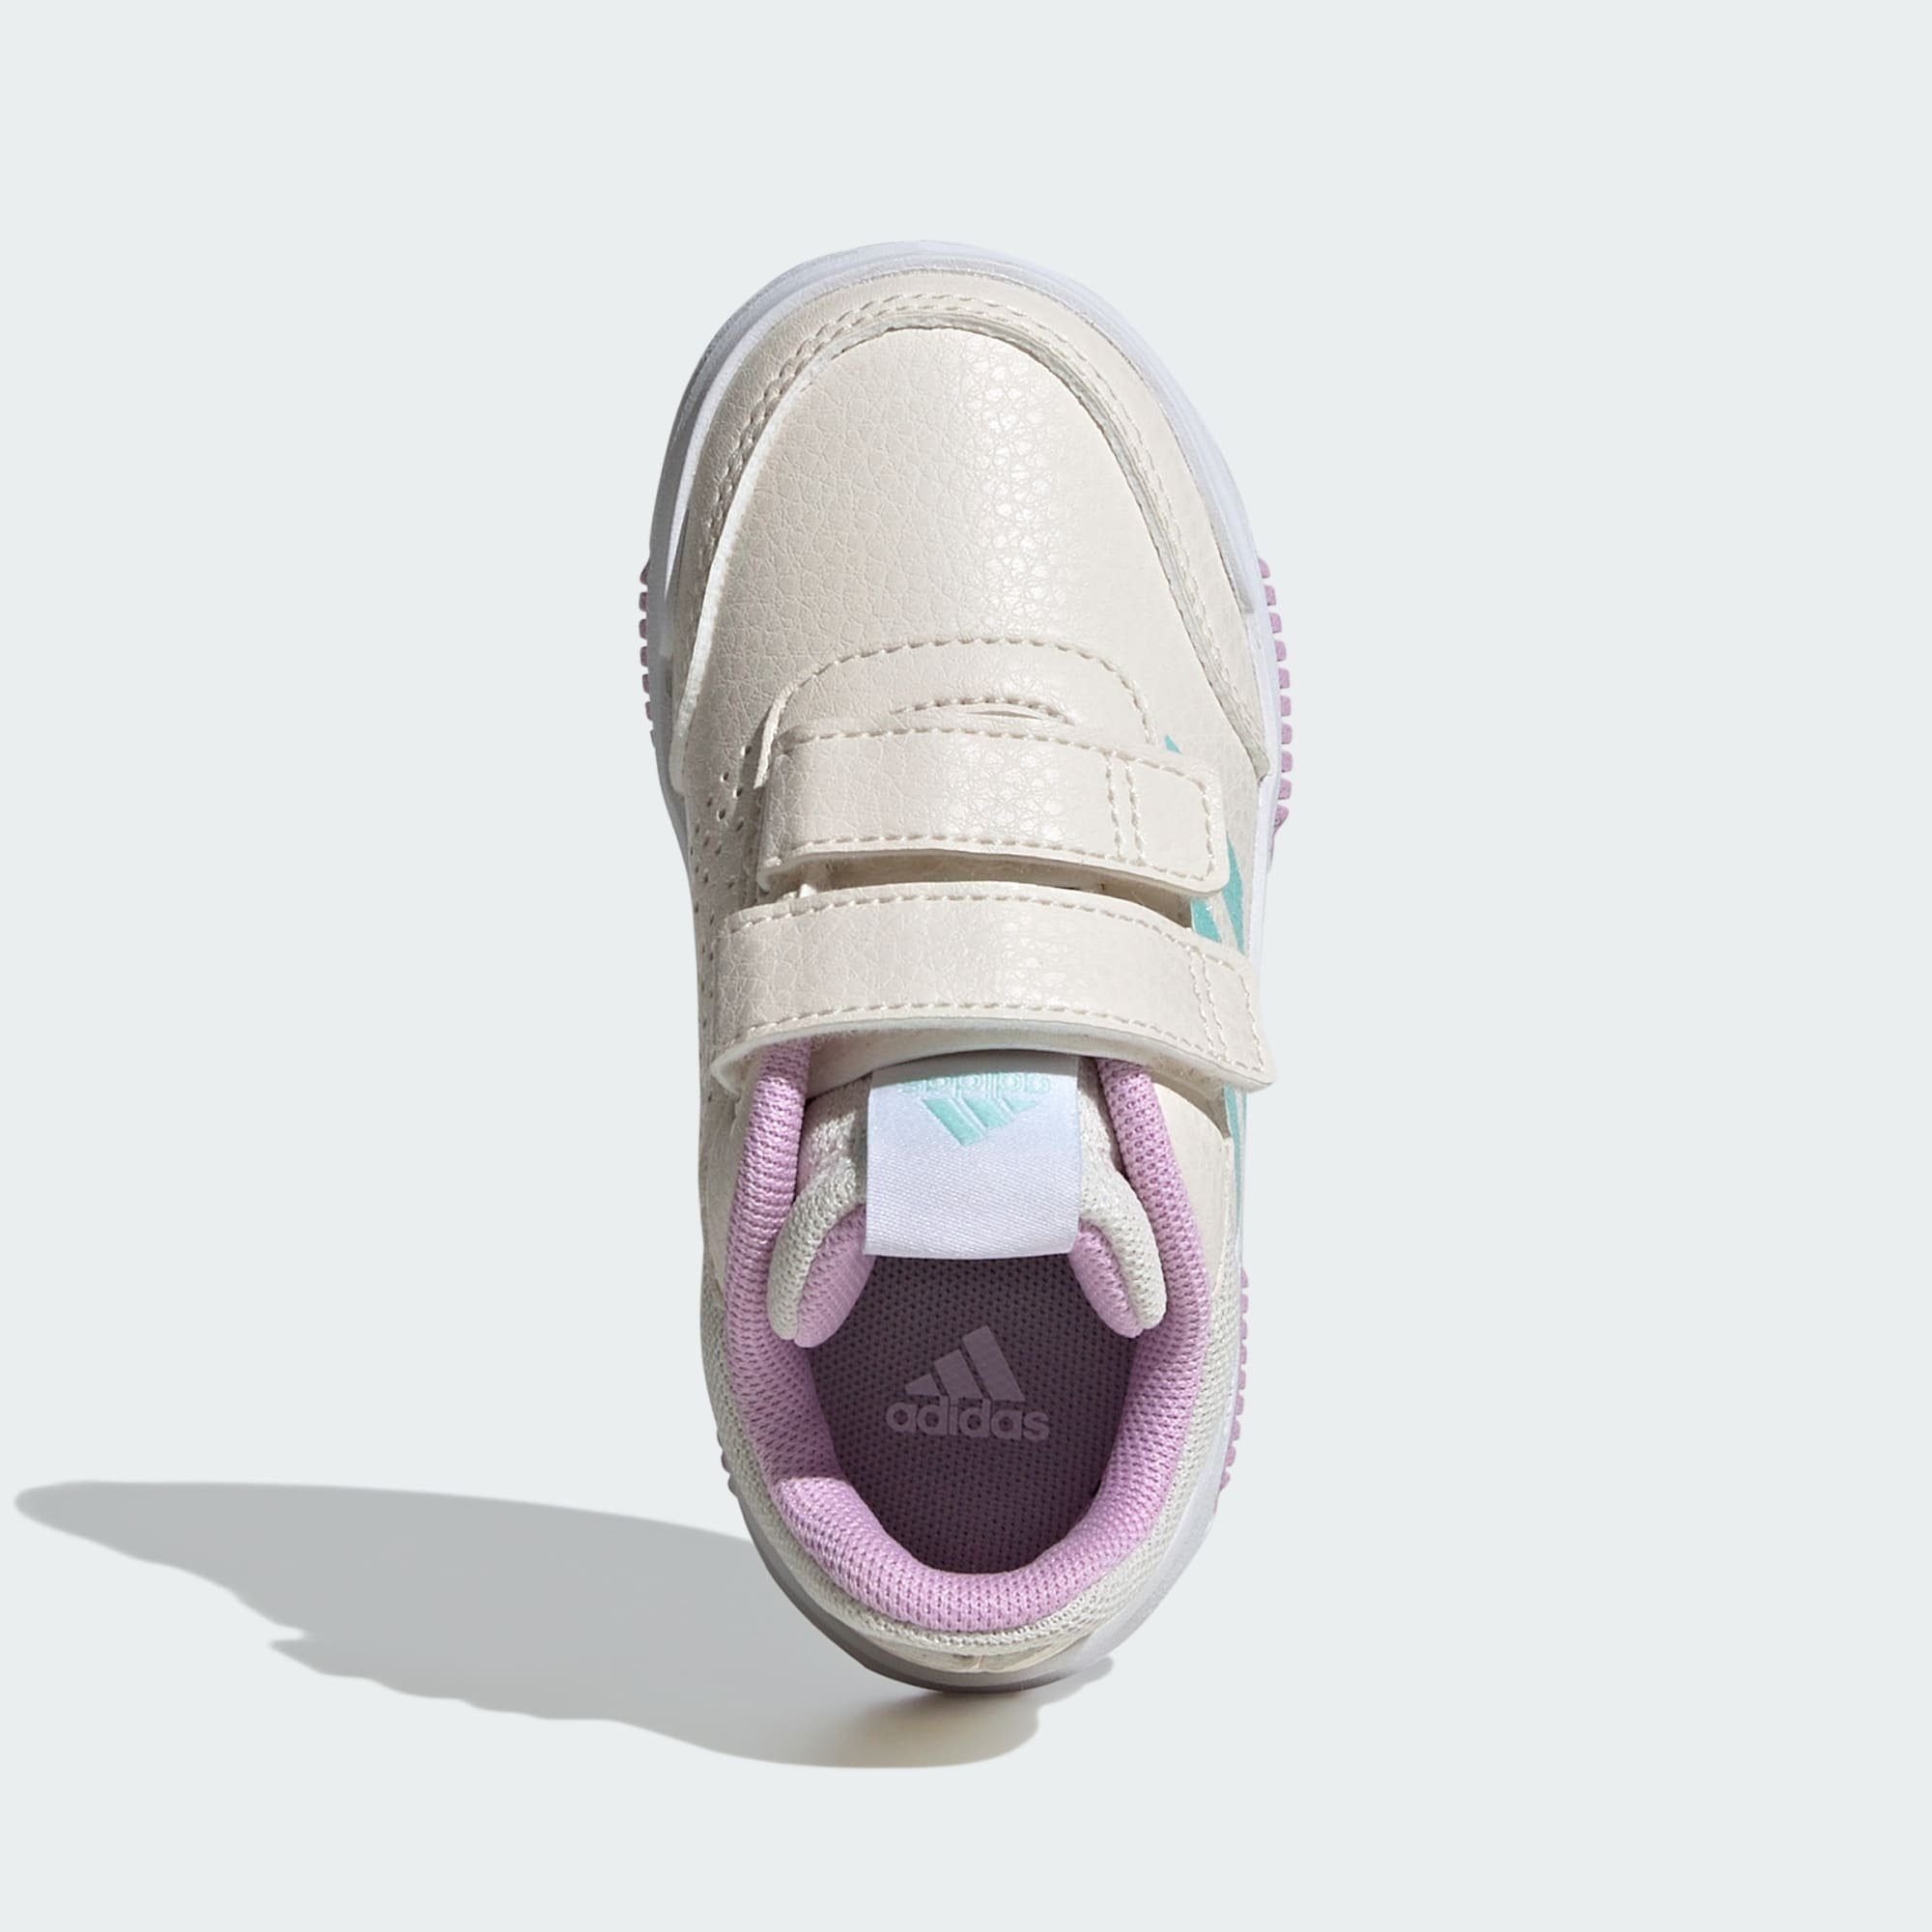 LOOP Sportswear adidas TENSAUR / Flash AND Lilac HOOK / Aqua Semi White Chalk Bliss Sneaker SCHUH